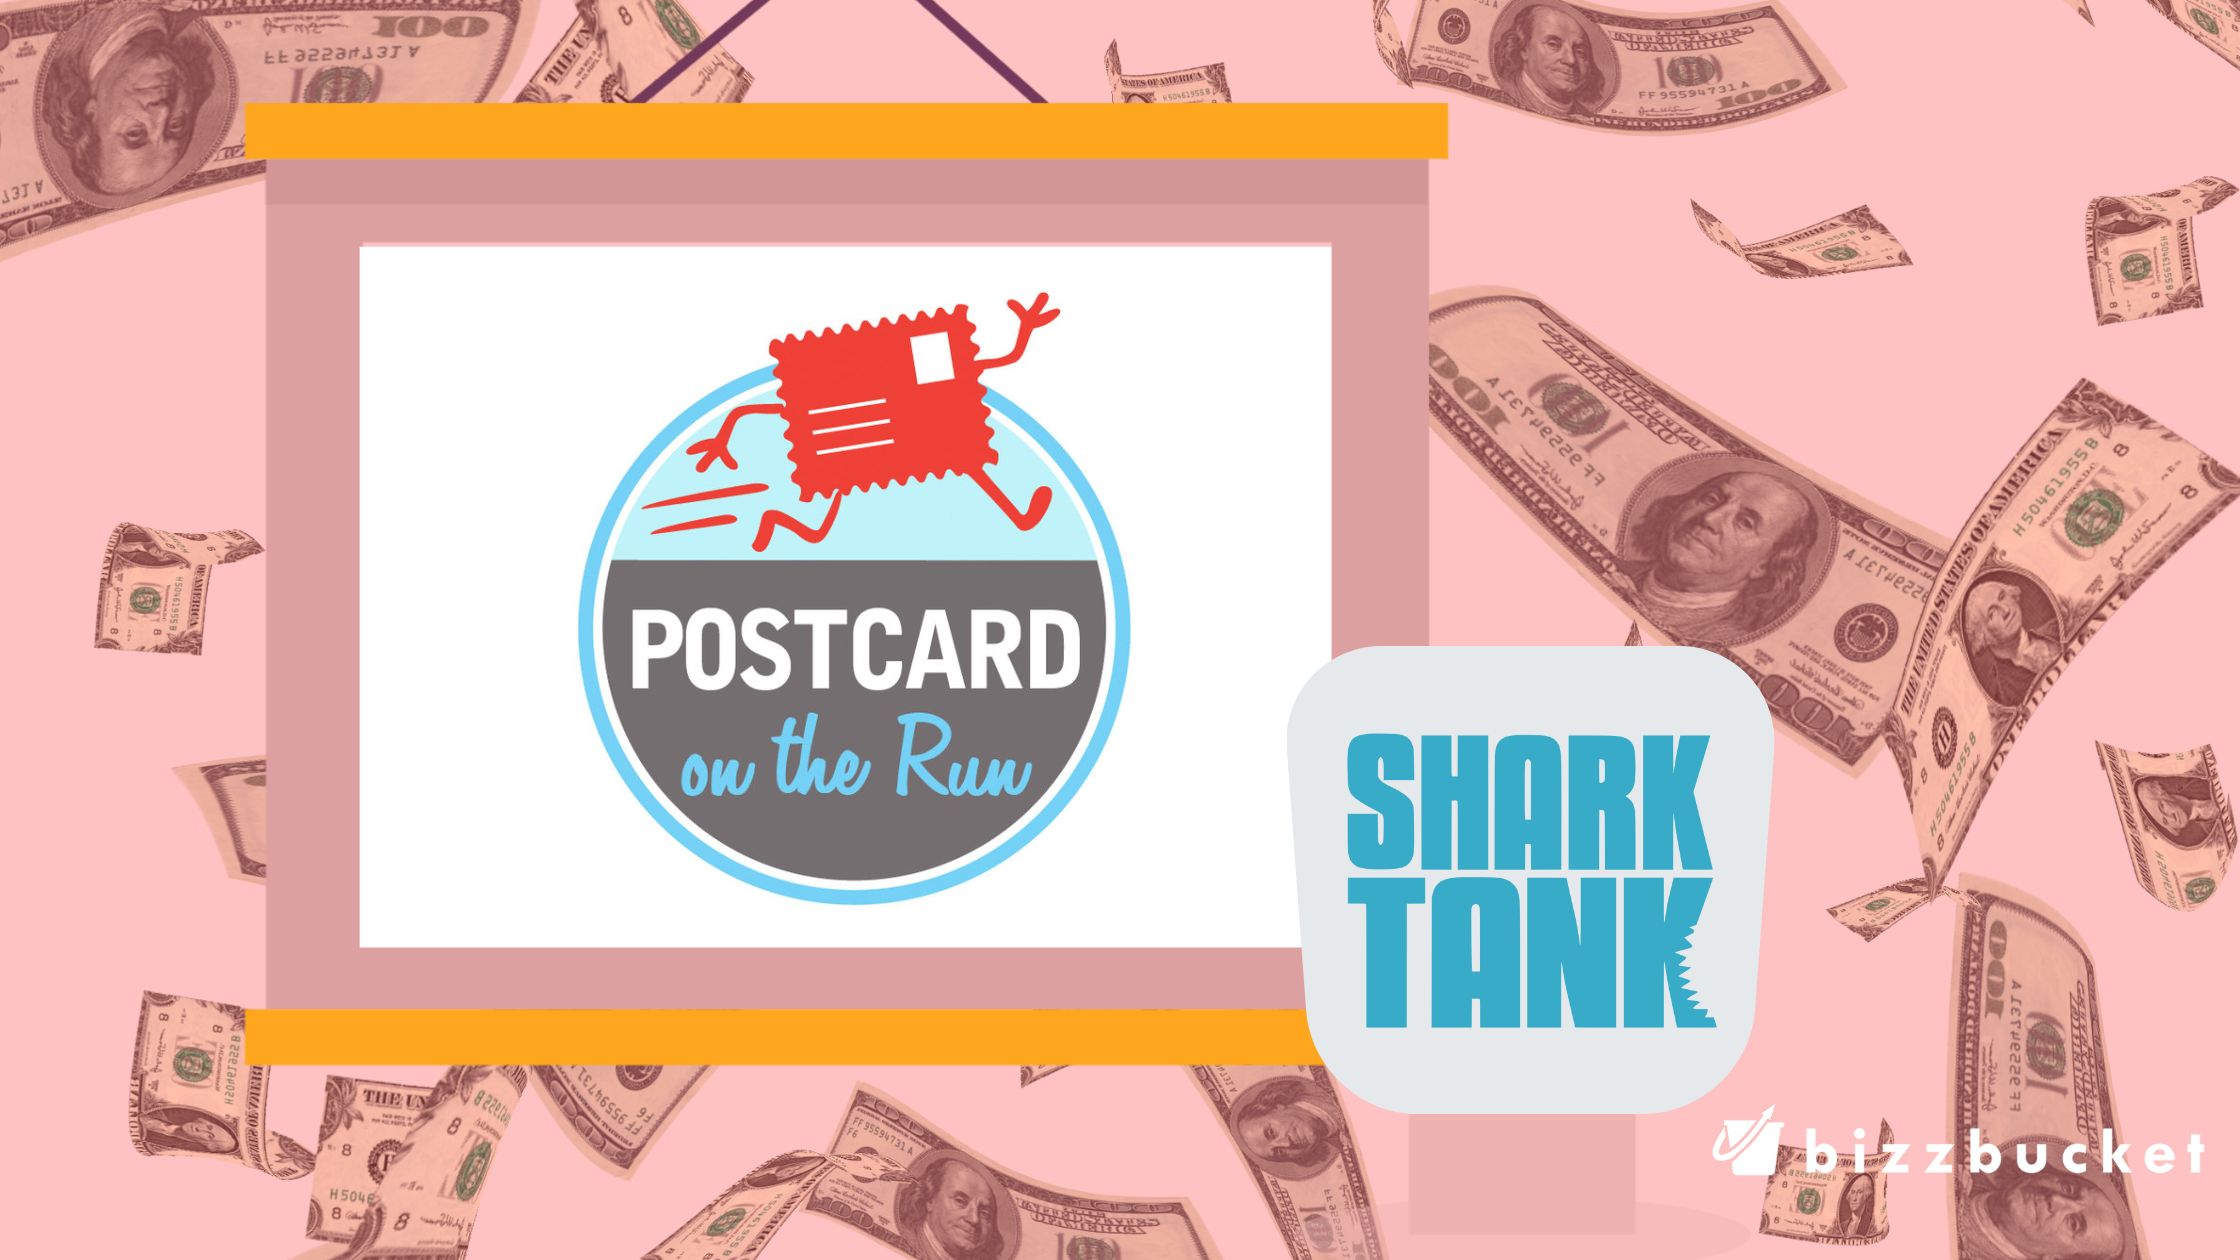 Postcard On The Run shark tank update